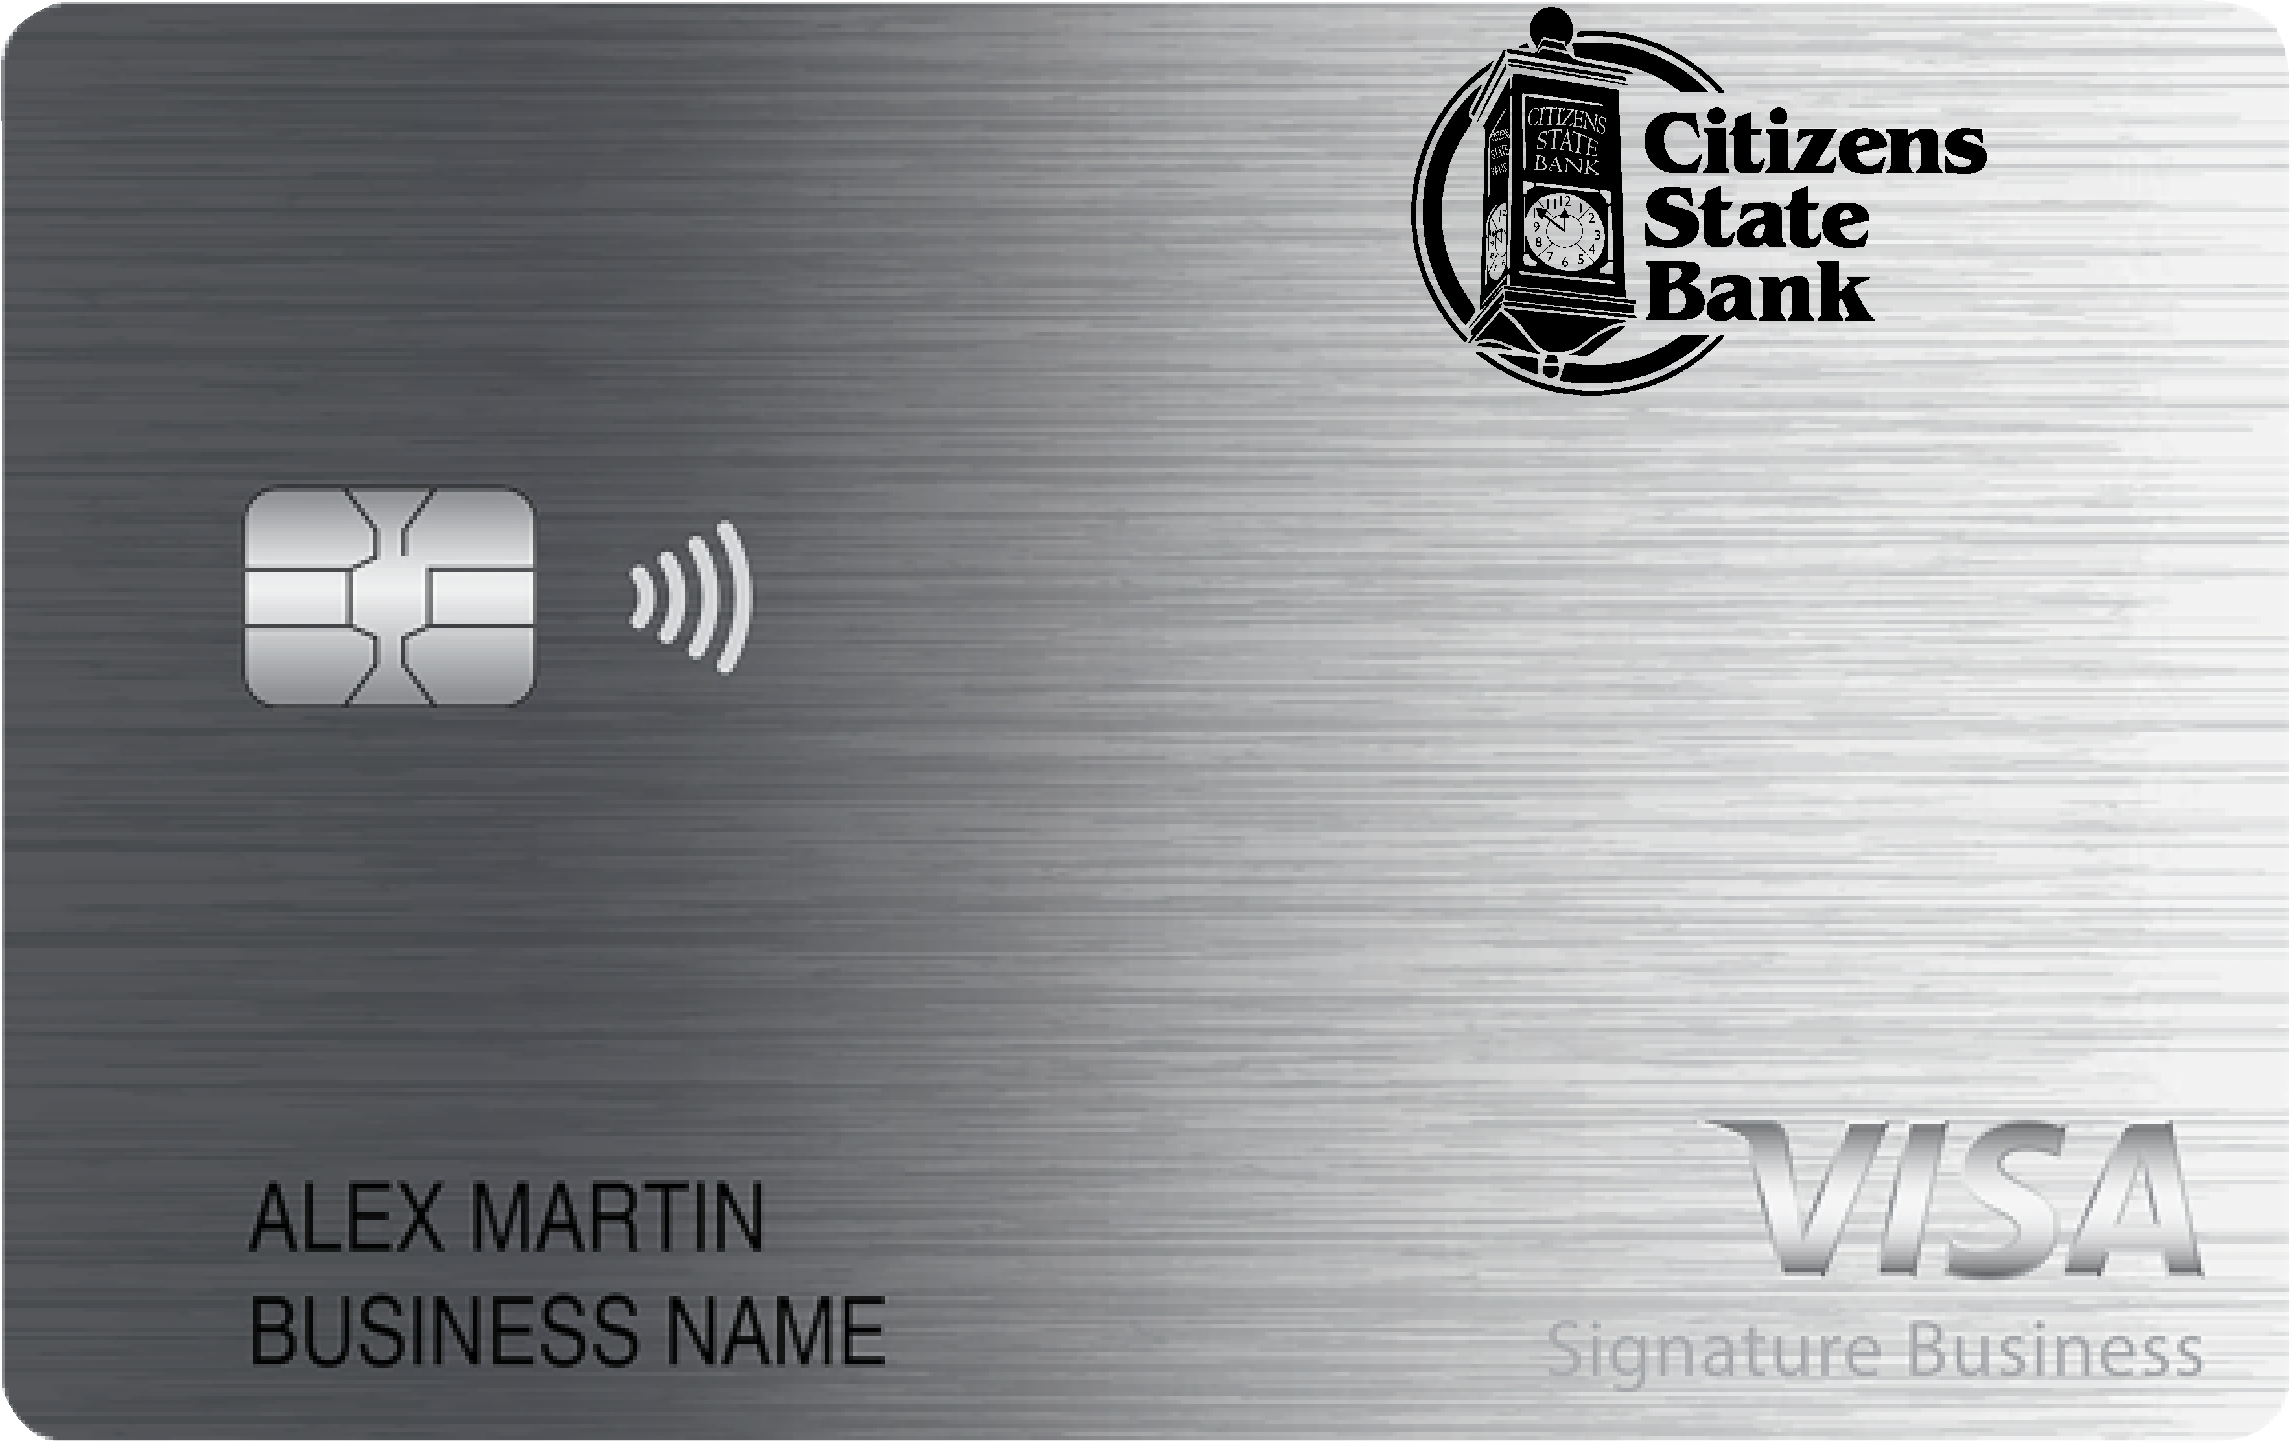 Citizens State Bank Smart Business Rewards Card